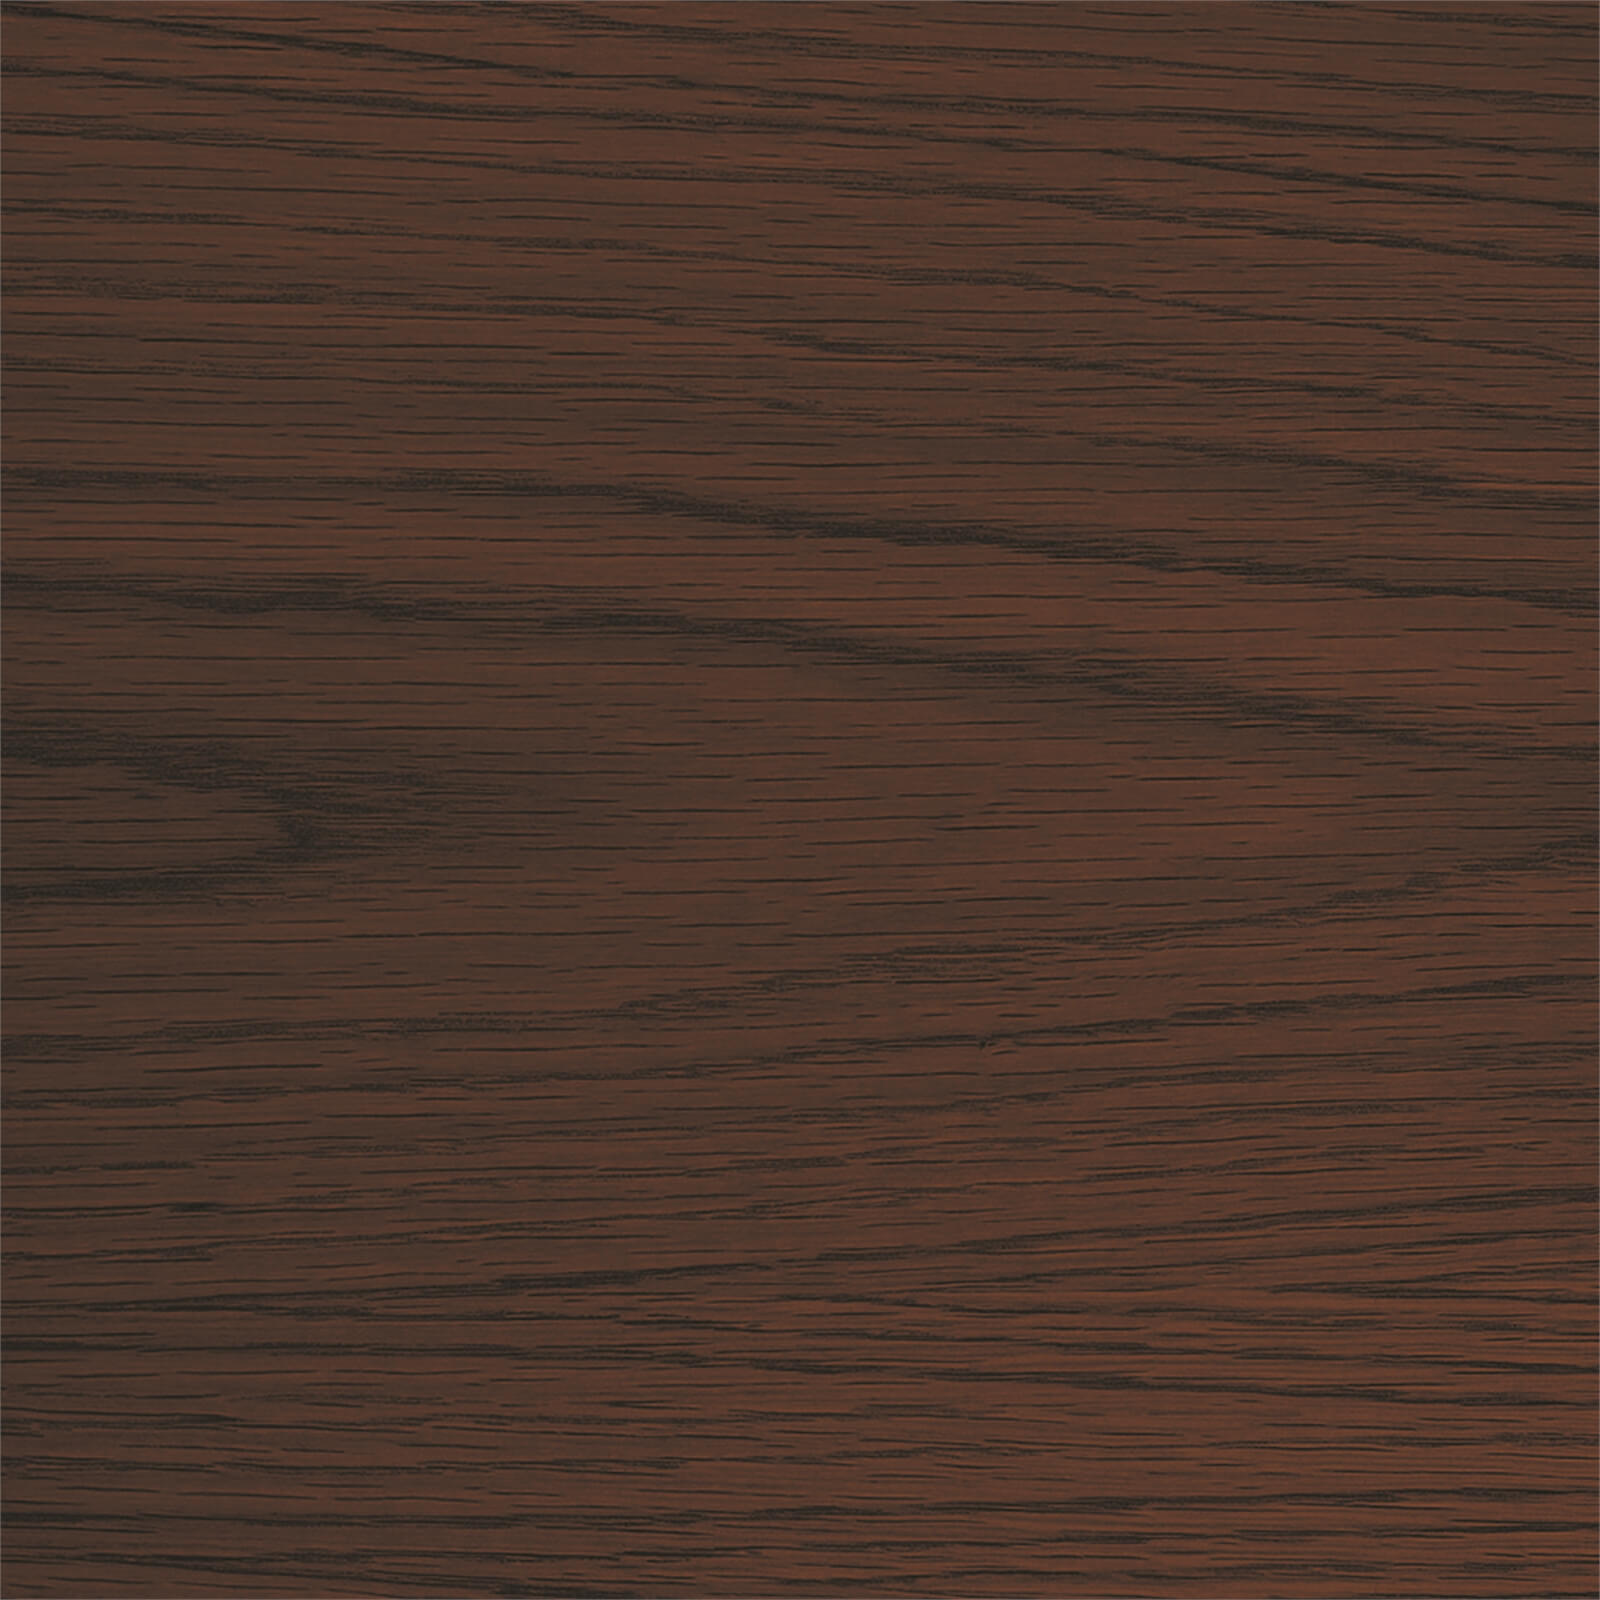 Ronseal Diamond Hard Floor Varnish - Walnut 2.5L